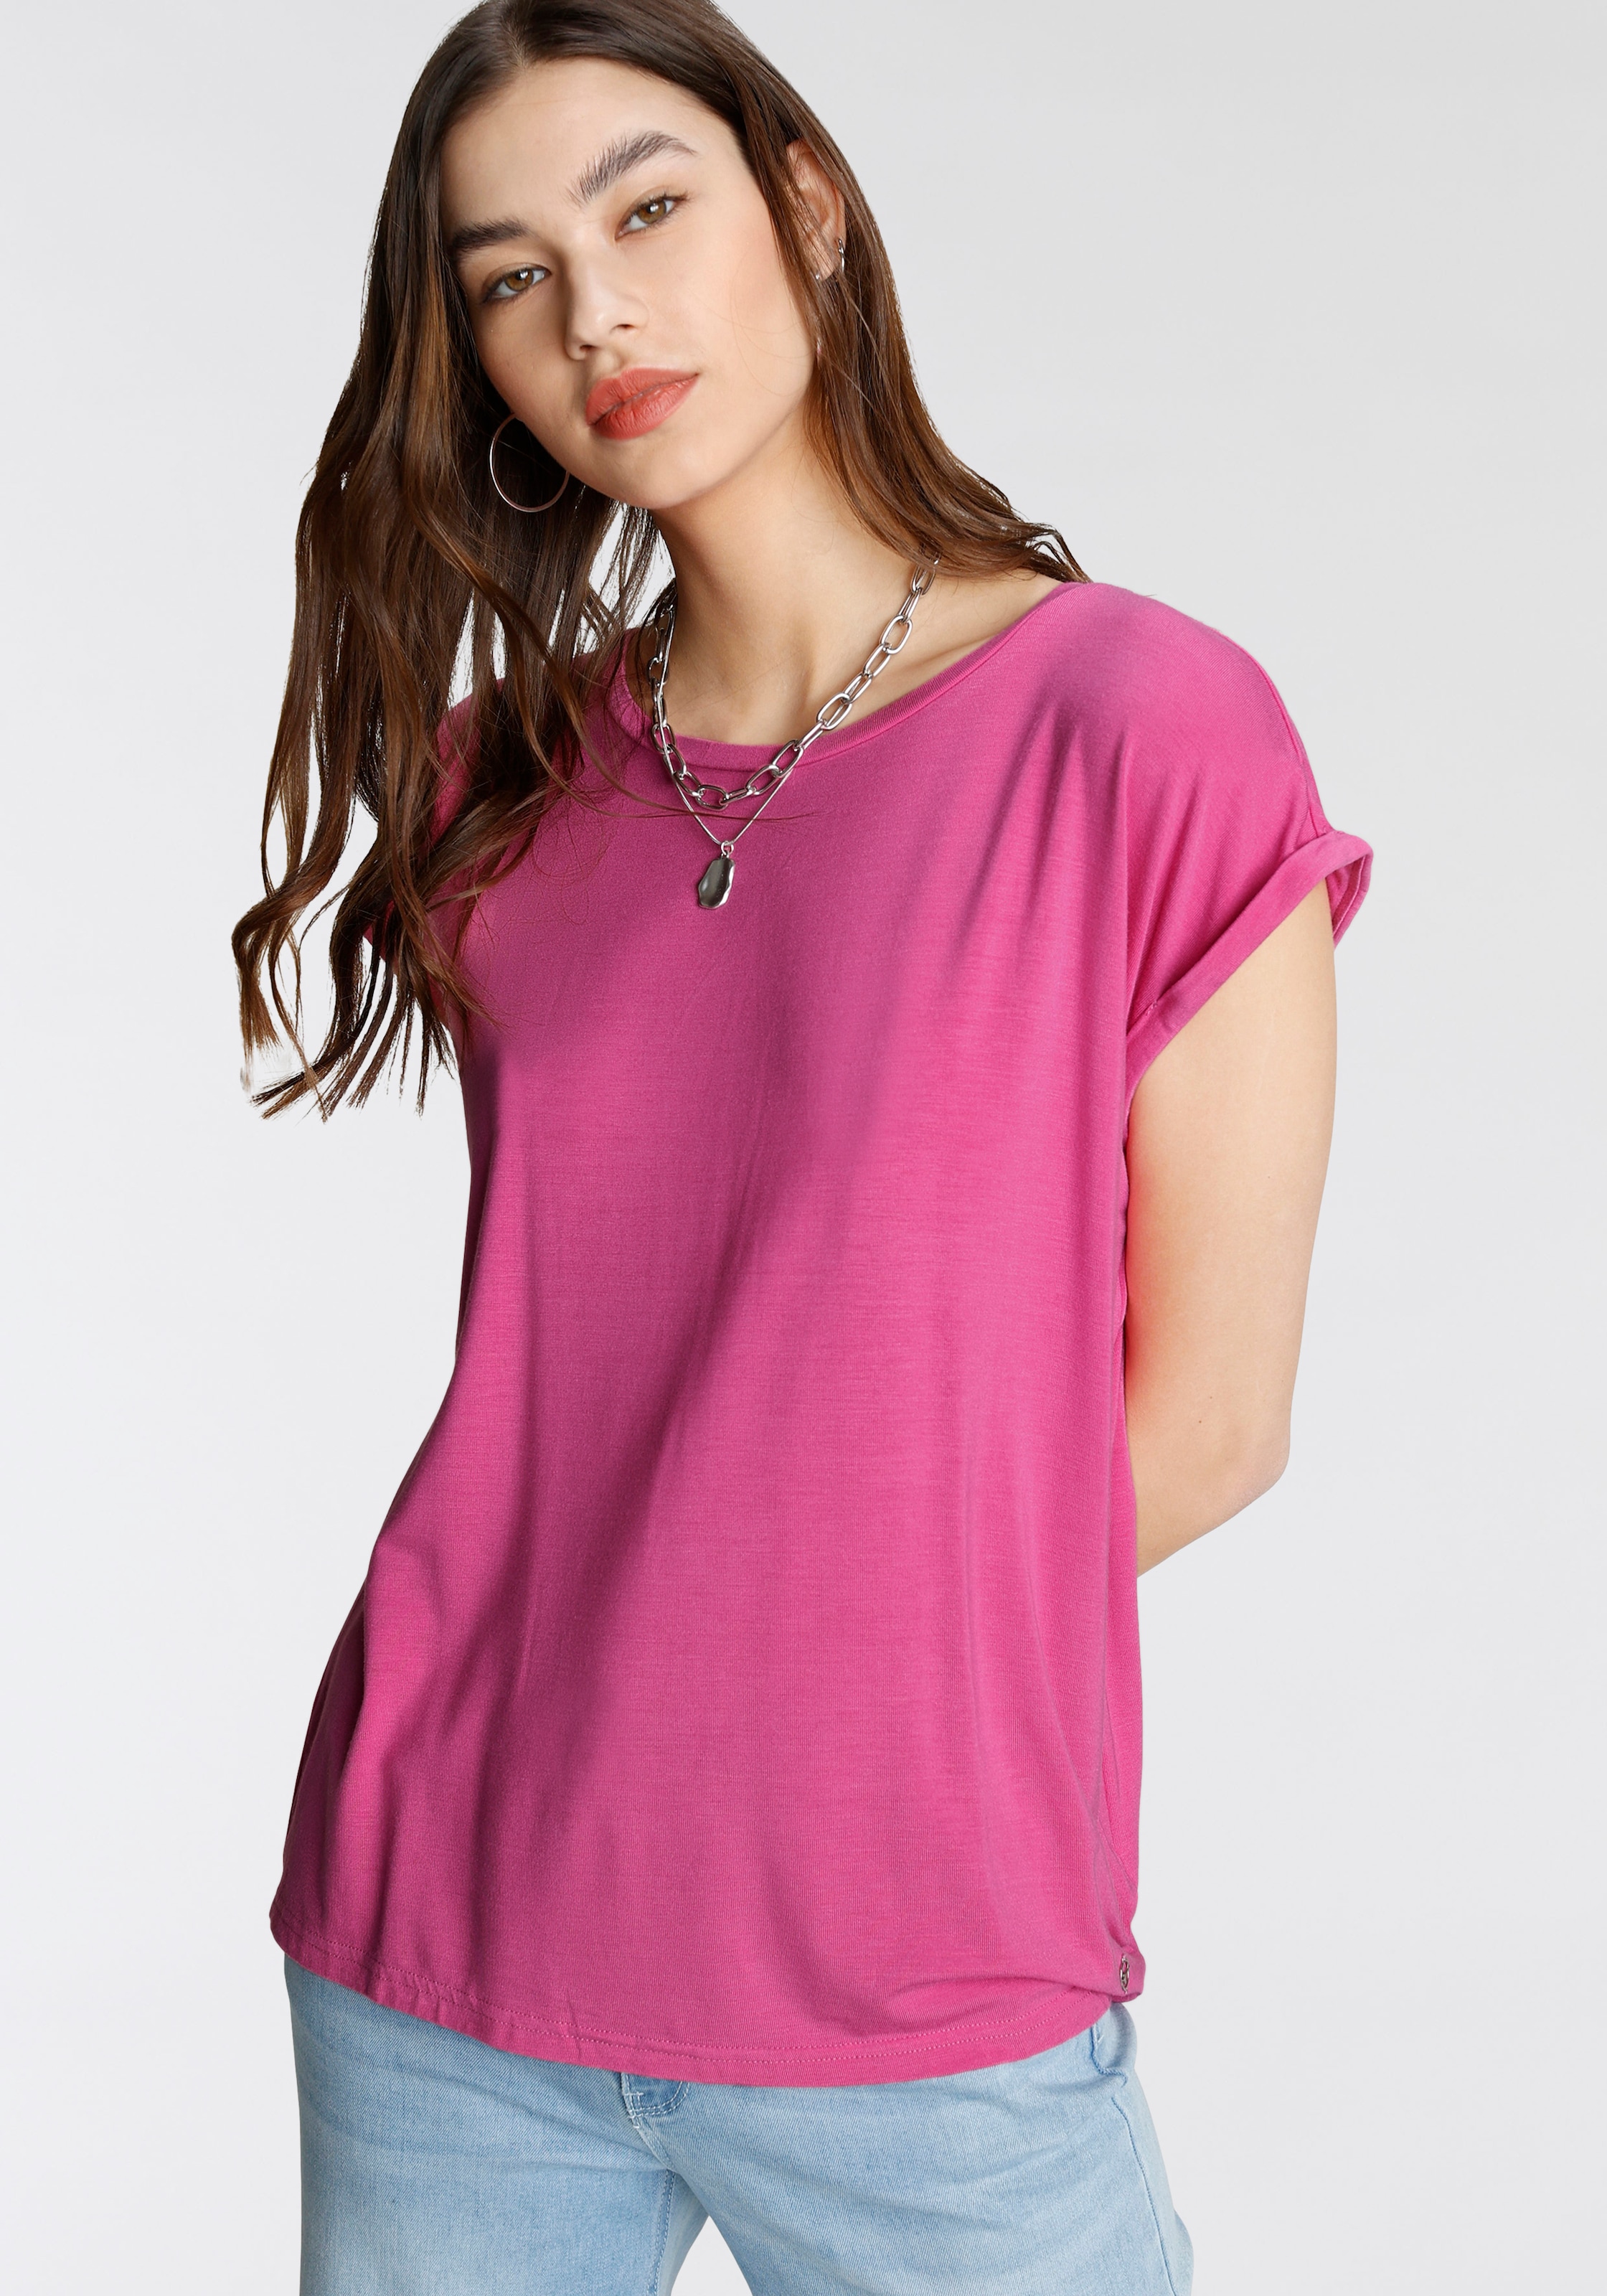 T-Shirts Damen pink günstig kaufen » I\'m walking | T-Shirts